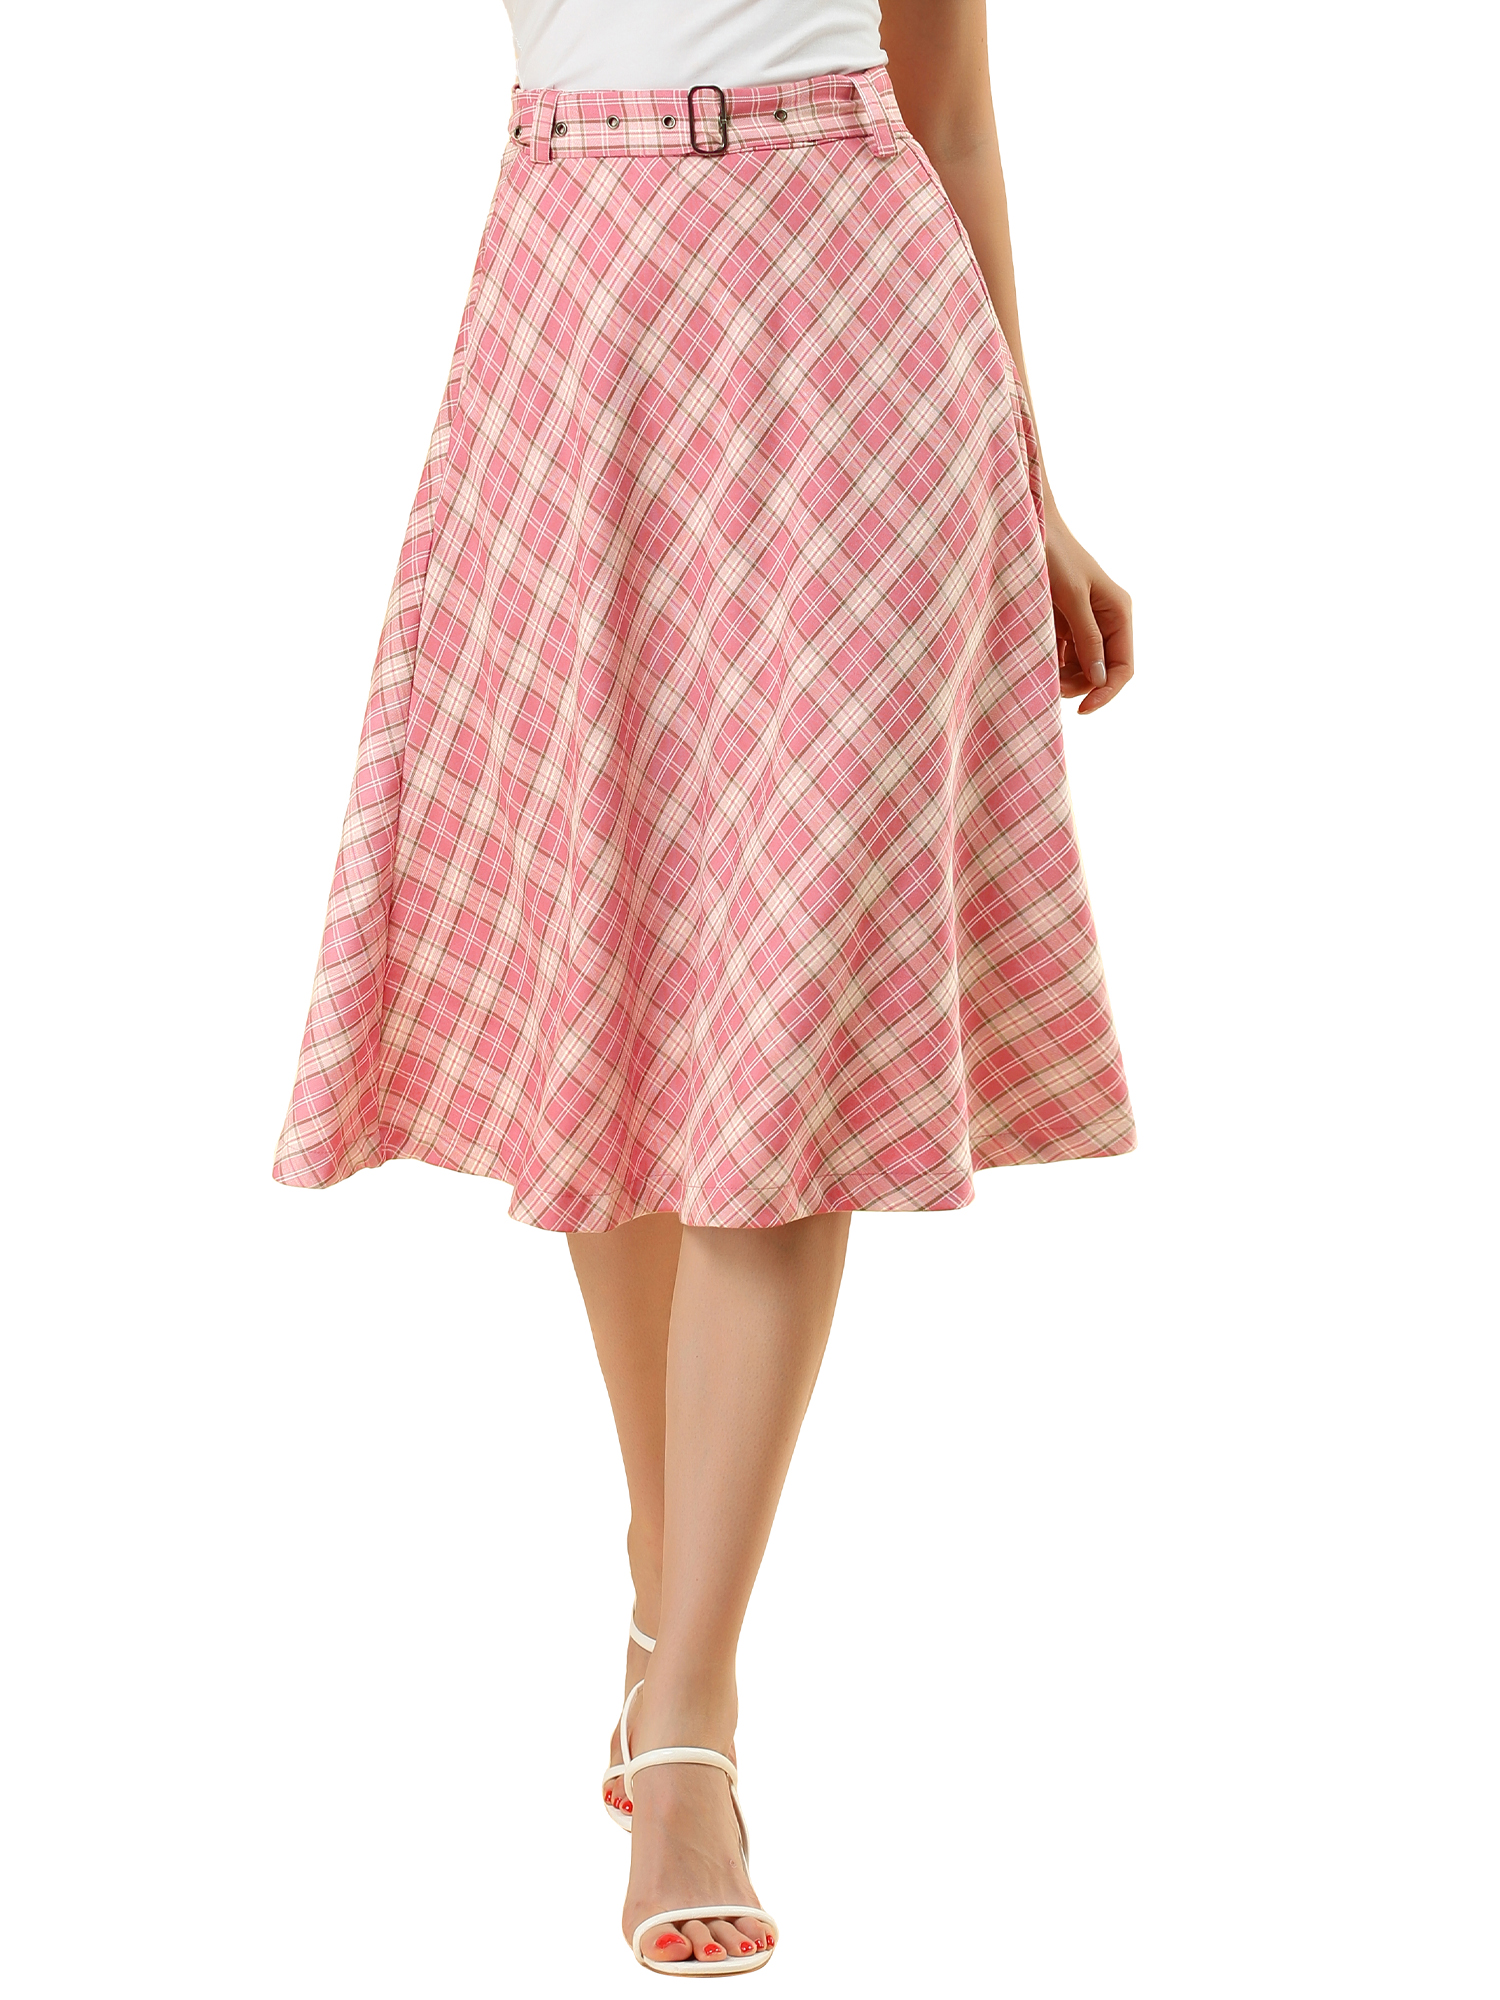 Unique Bargains Women's Plaid High Waist Belted Vintage A-Line Midi Skirt M Pink - image 5 of 8